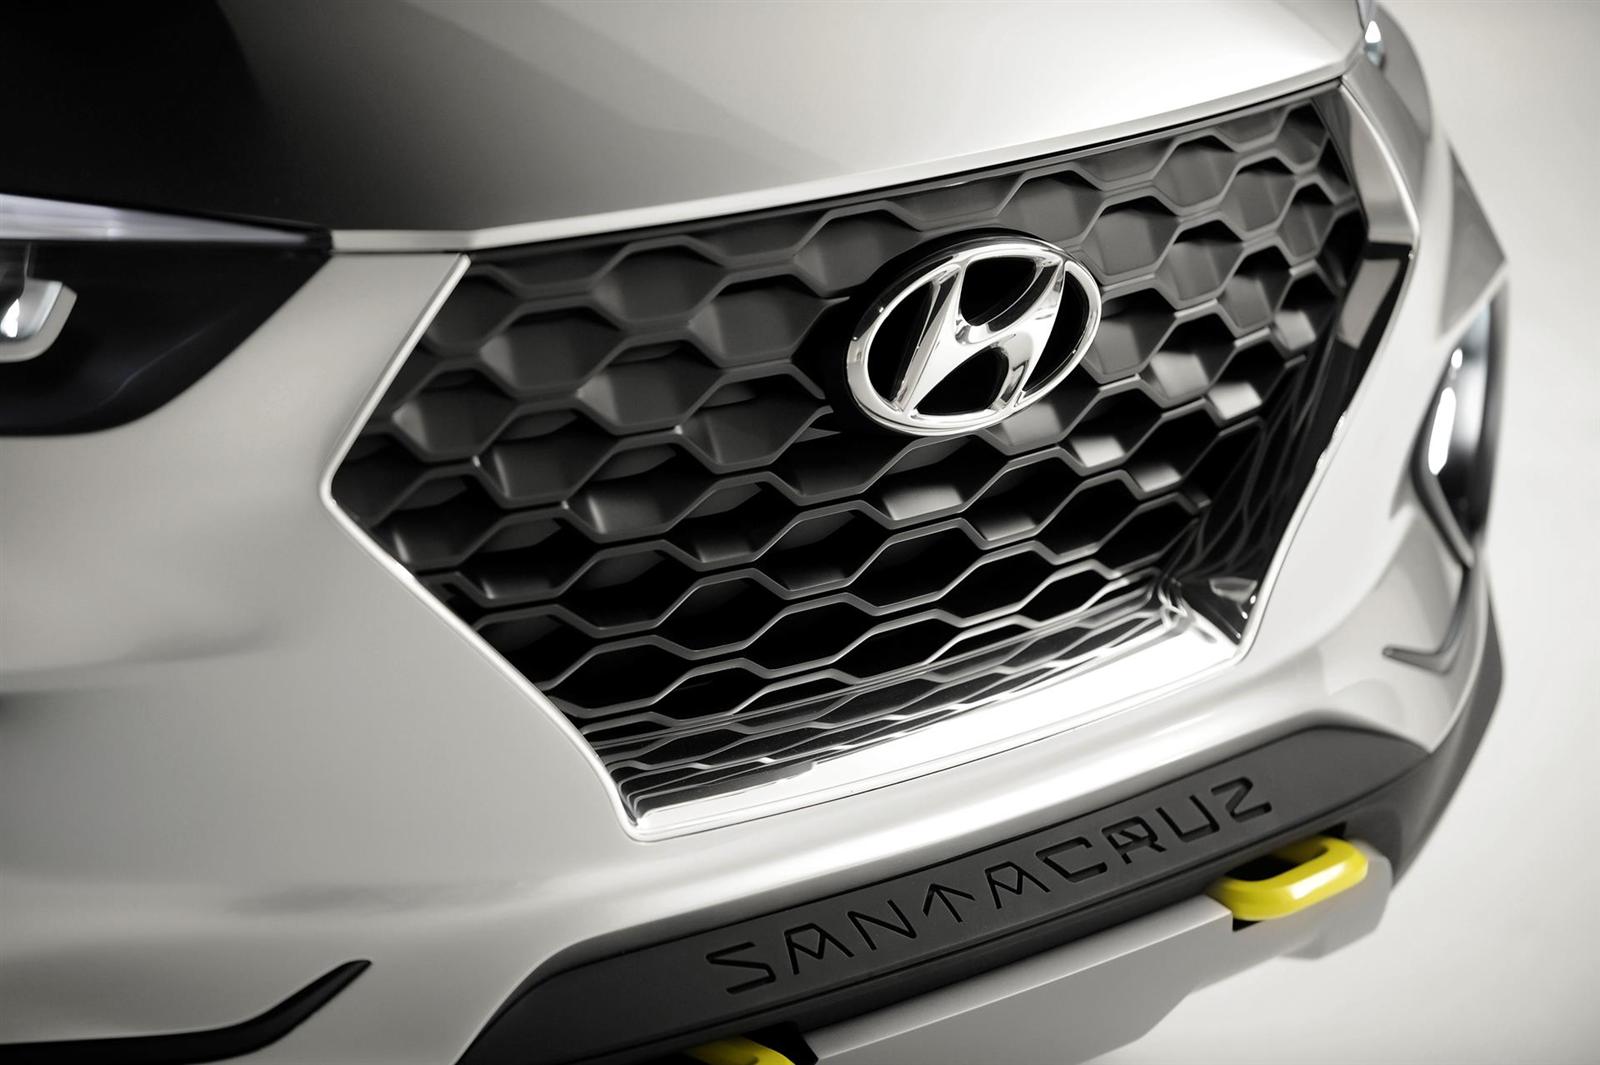 2015 Hyundai Santa Cruz Crossover Truck Concept